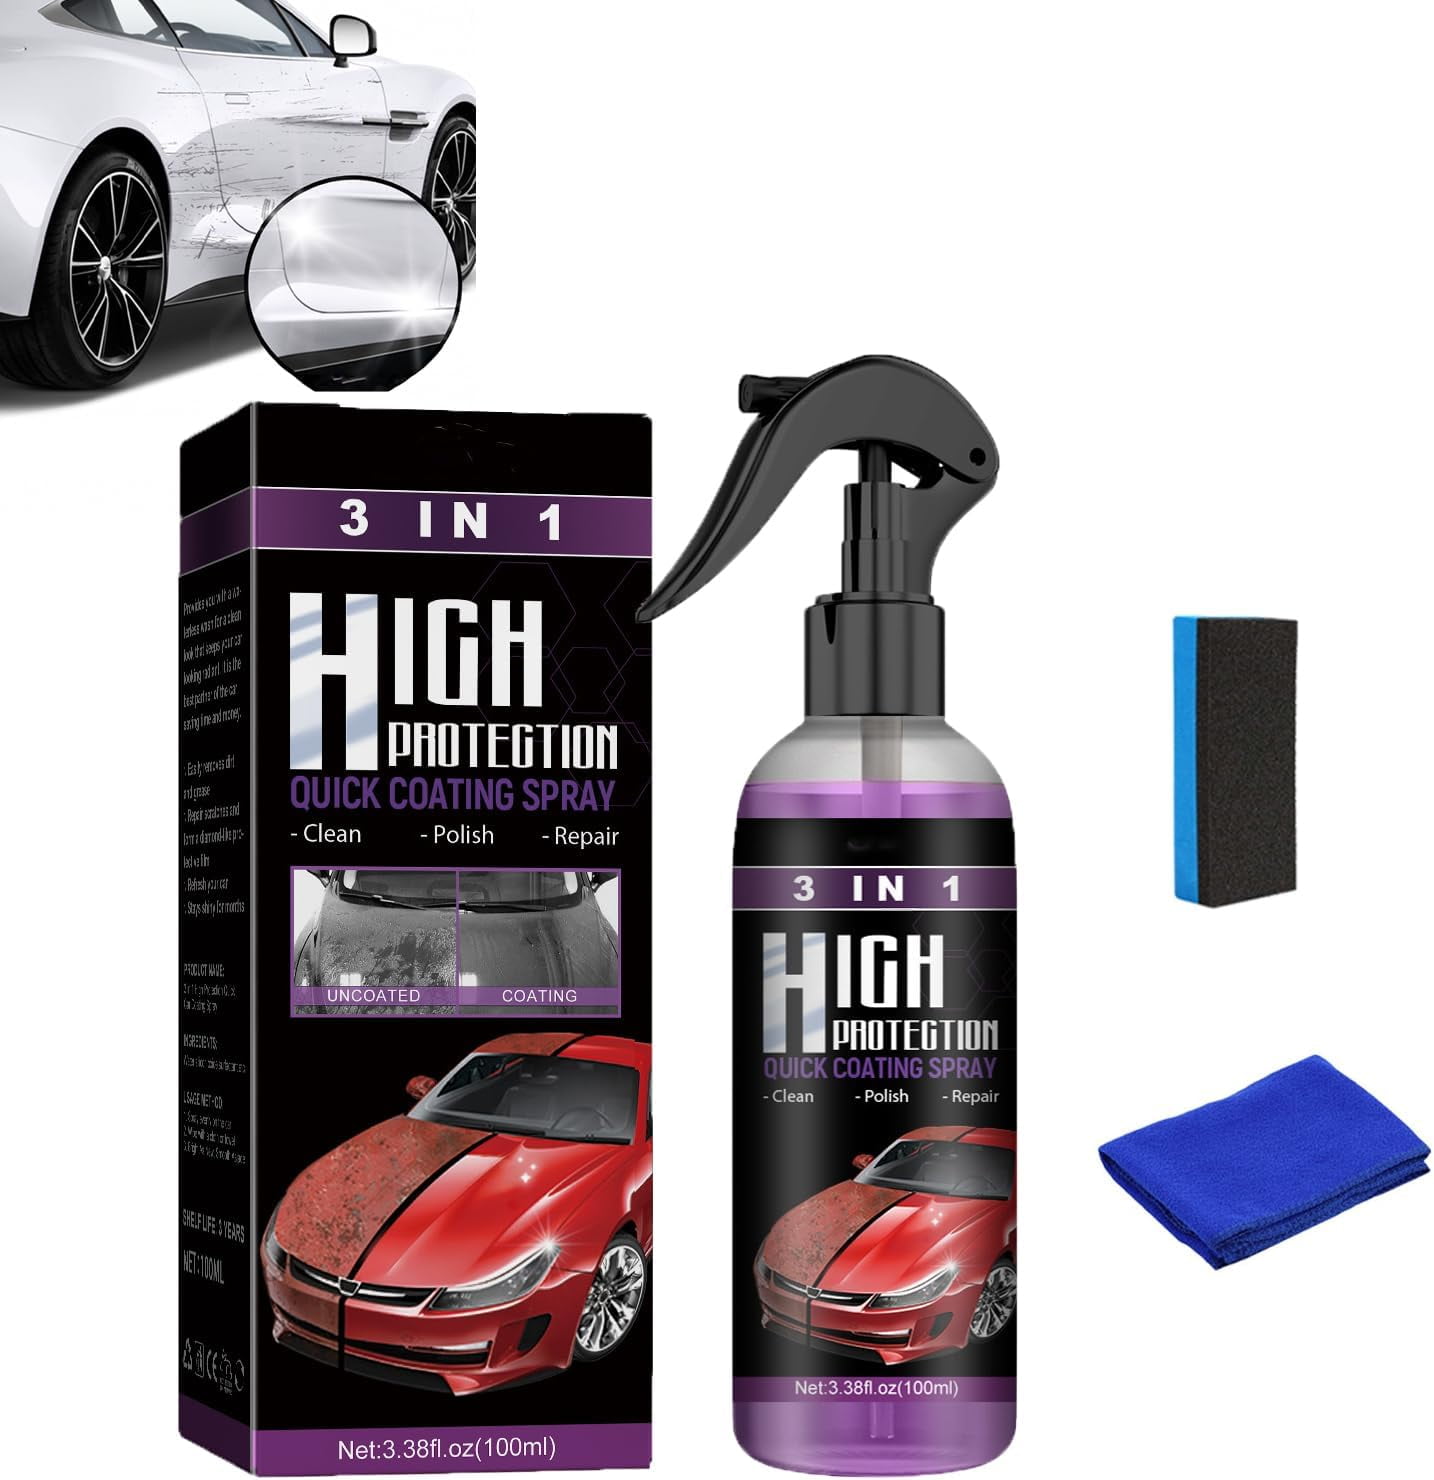  TYGHBN Newbeeoo Car Coating Spray, 3 in 1 High